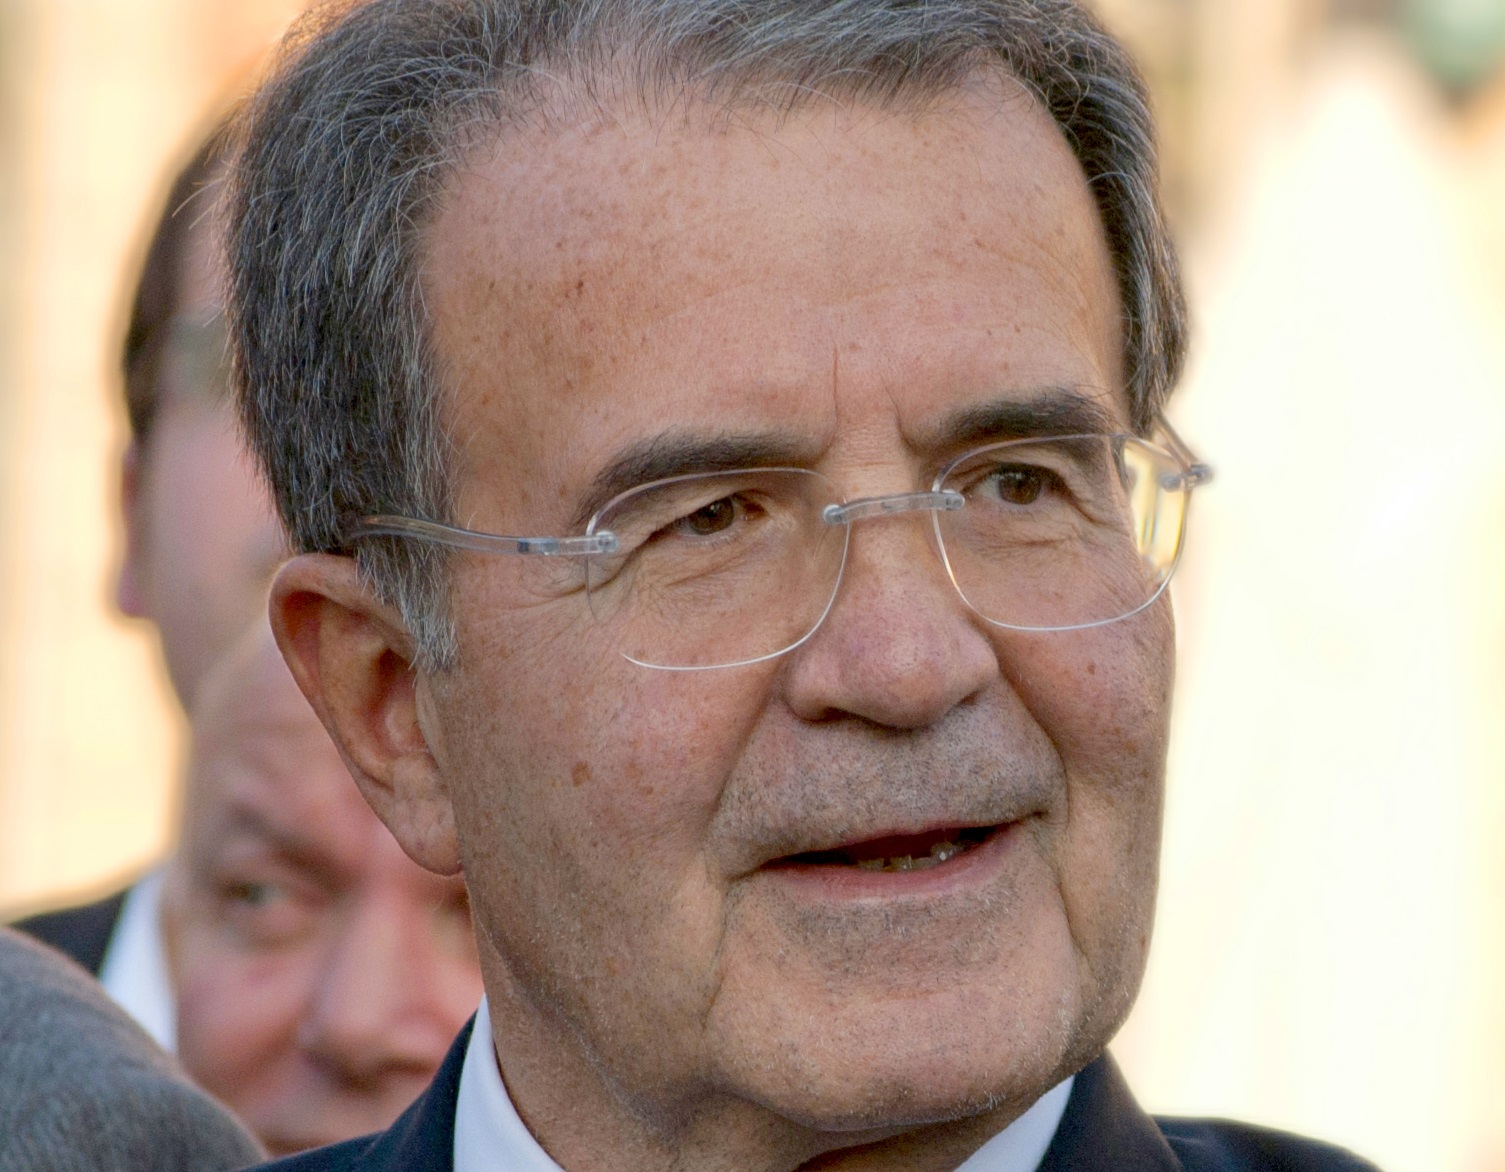 Romano Prodi, Former Prime Minister of Italy & Former President of the European Commission